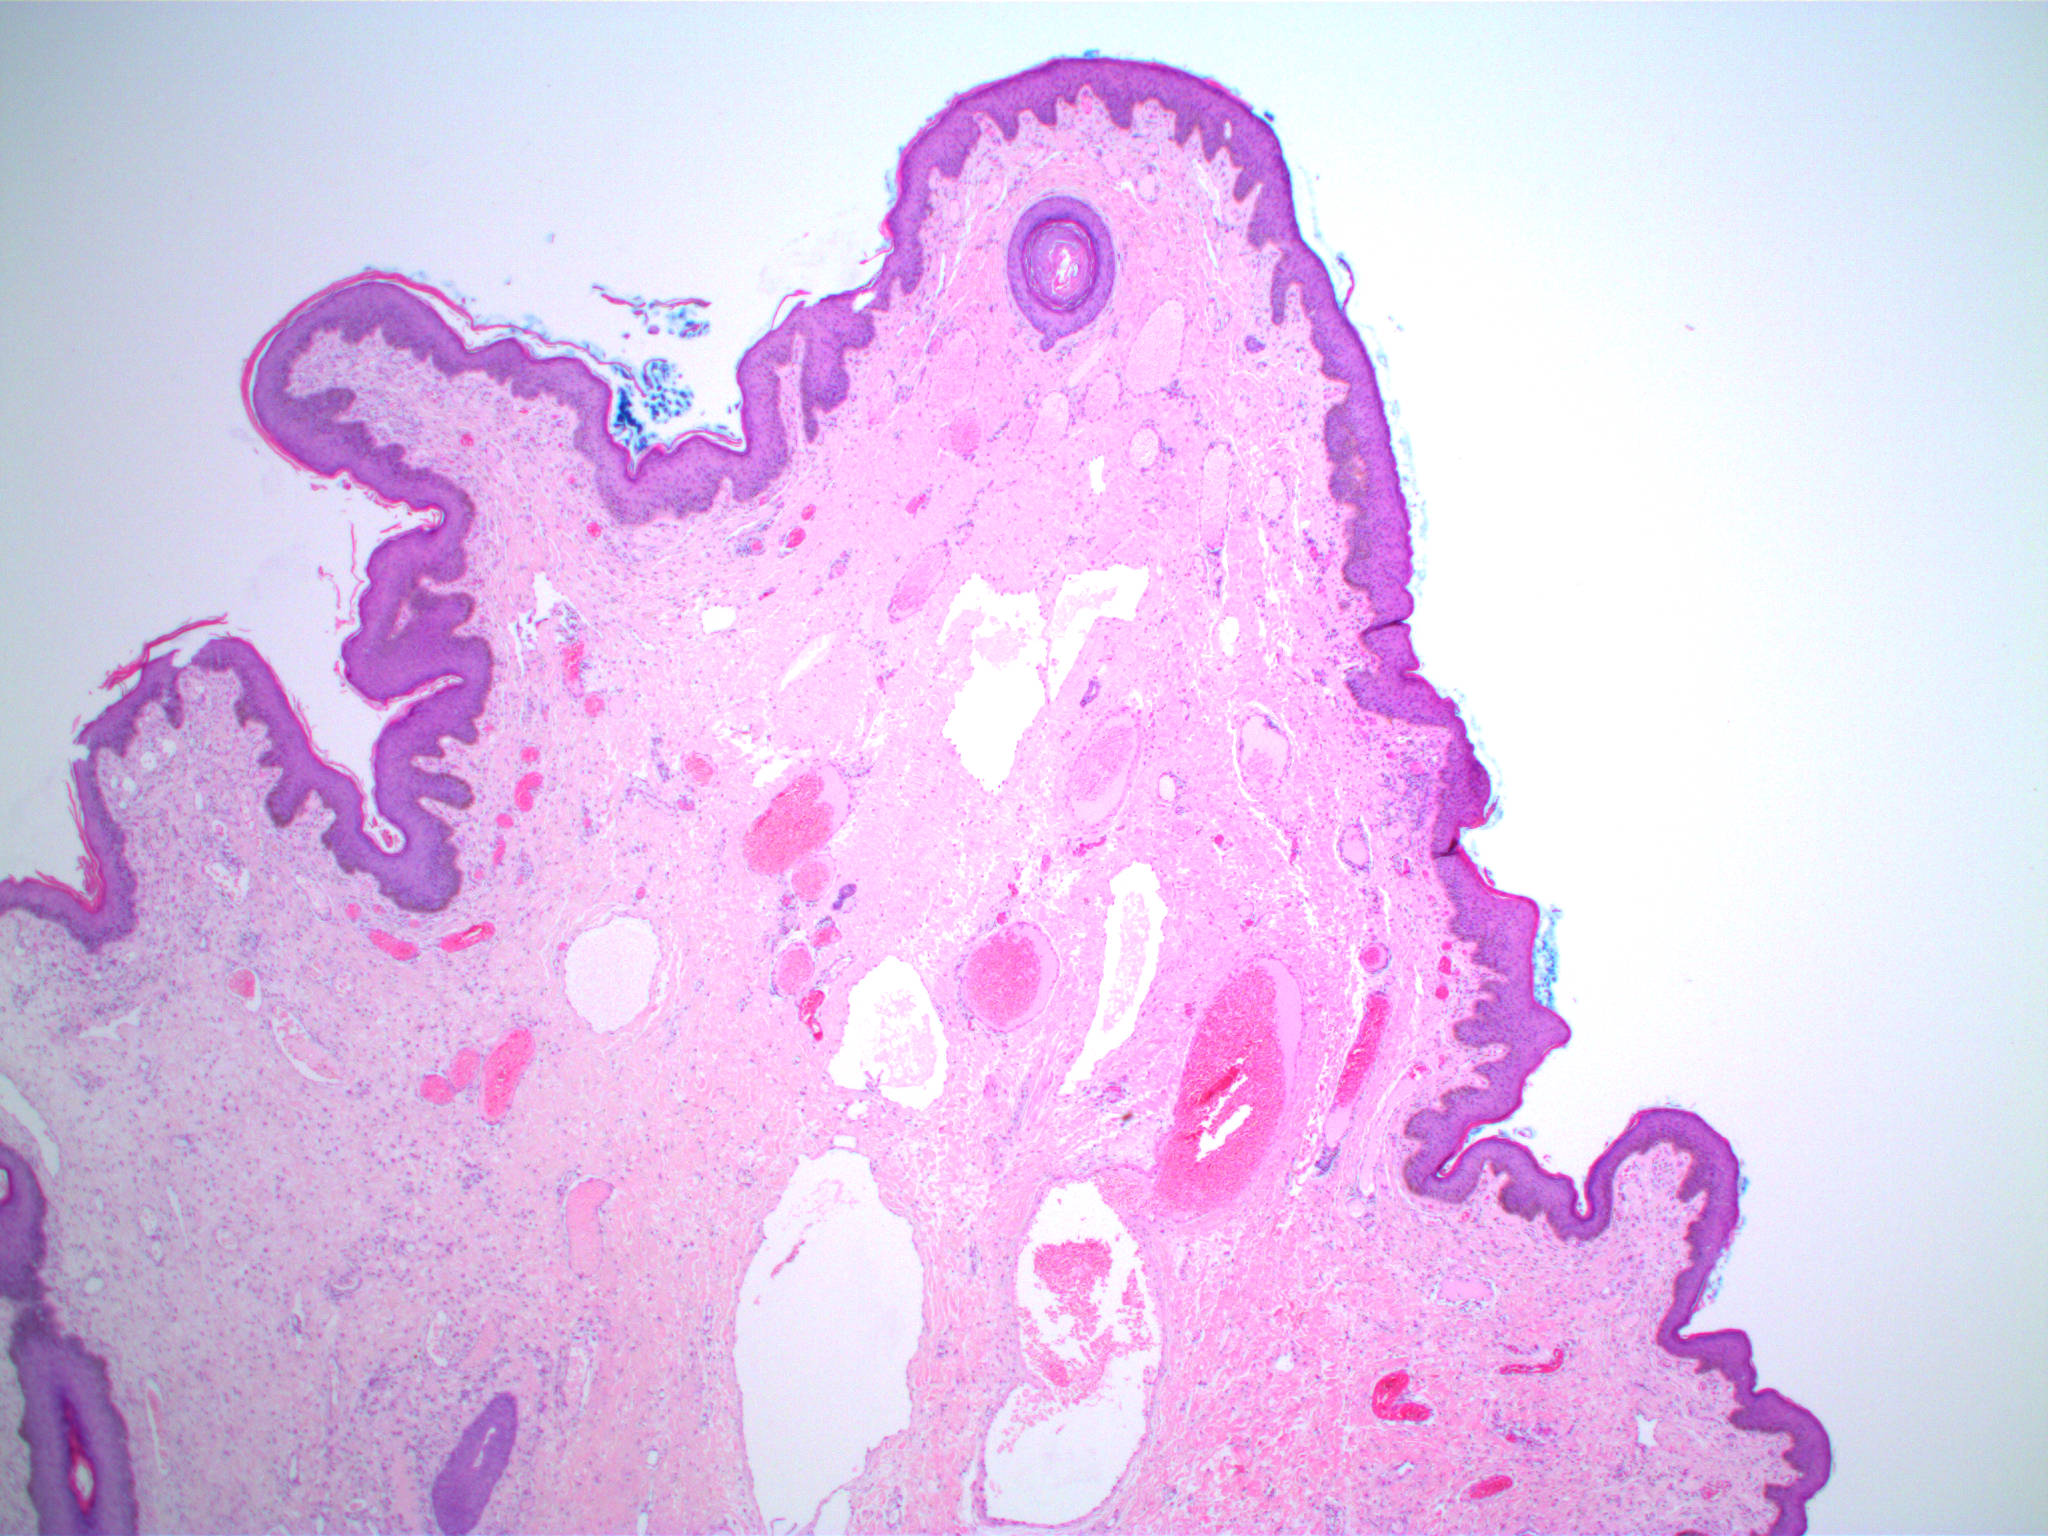 papilloma fibroepithelial